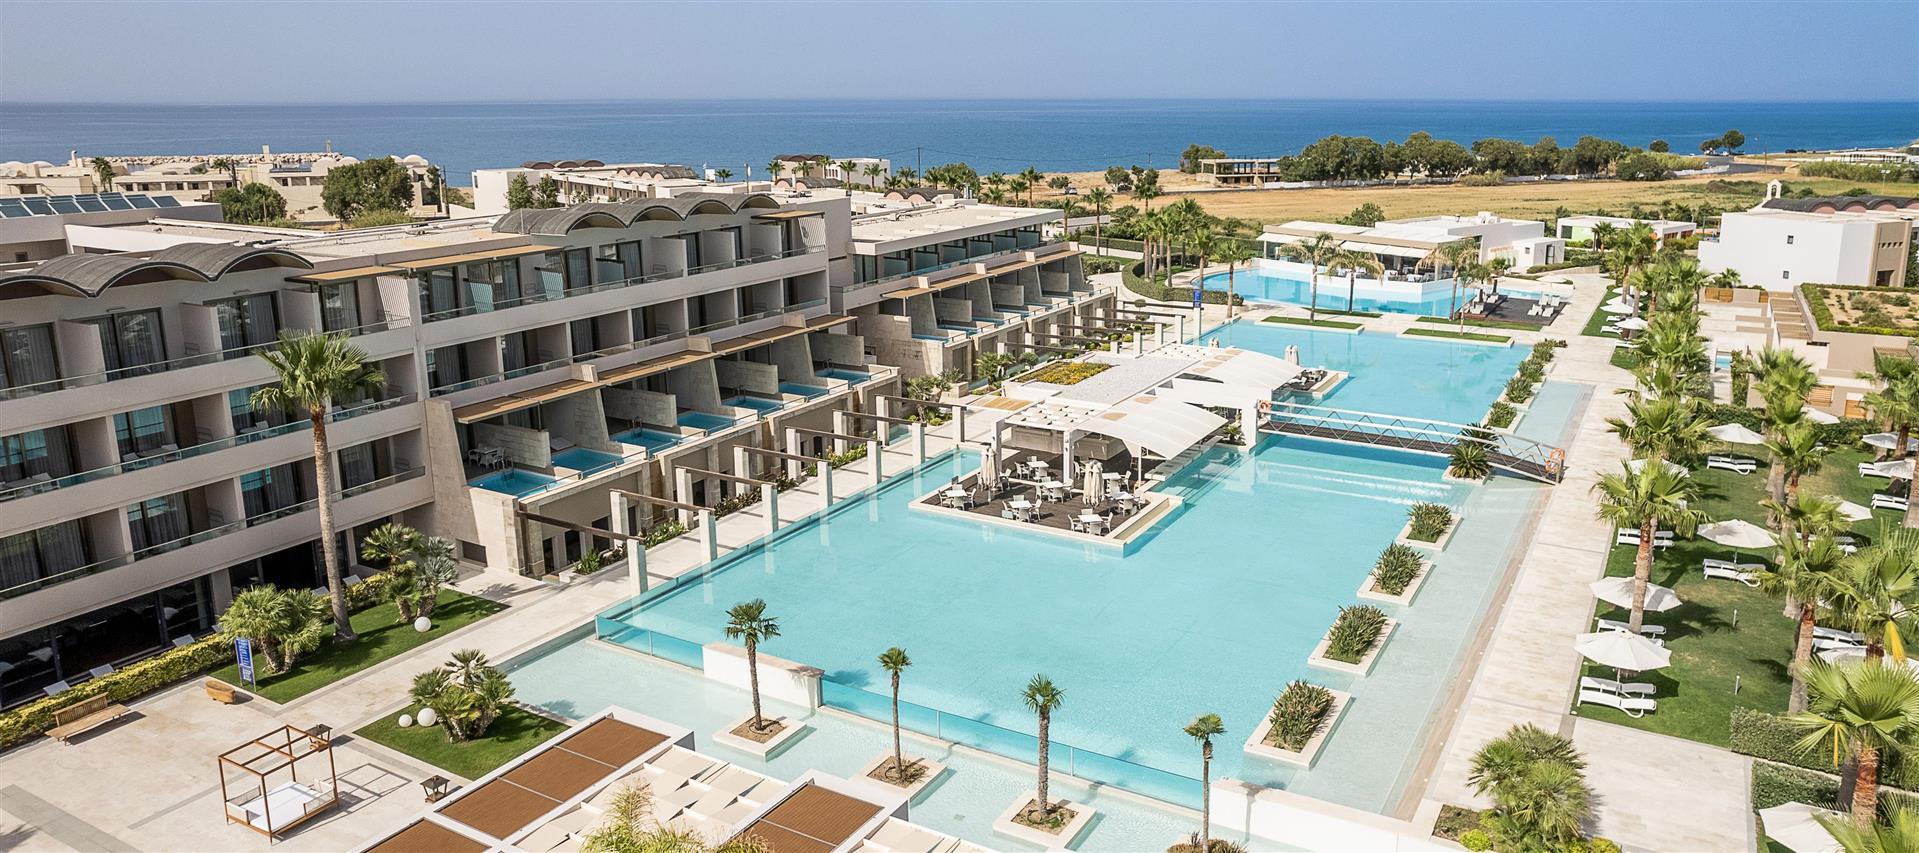 Avra Imperial Hotel in Crete, GR